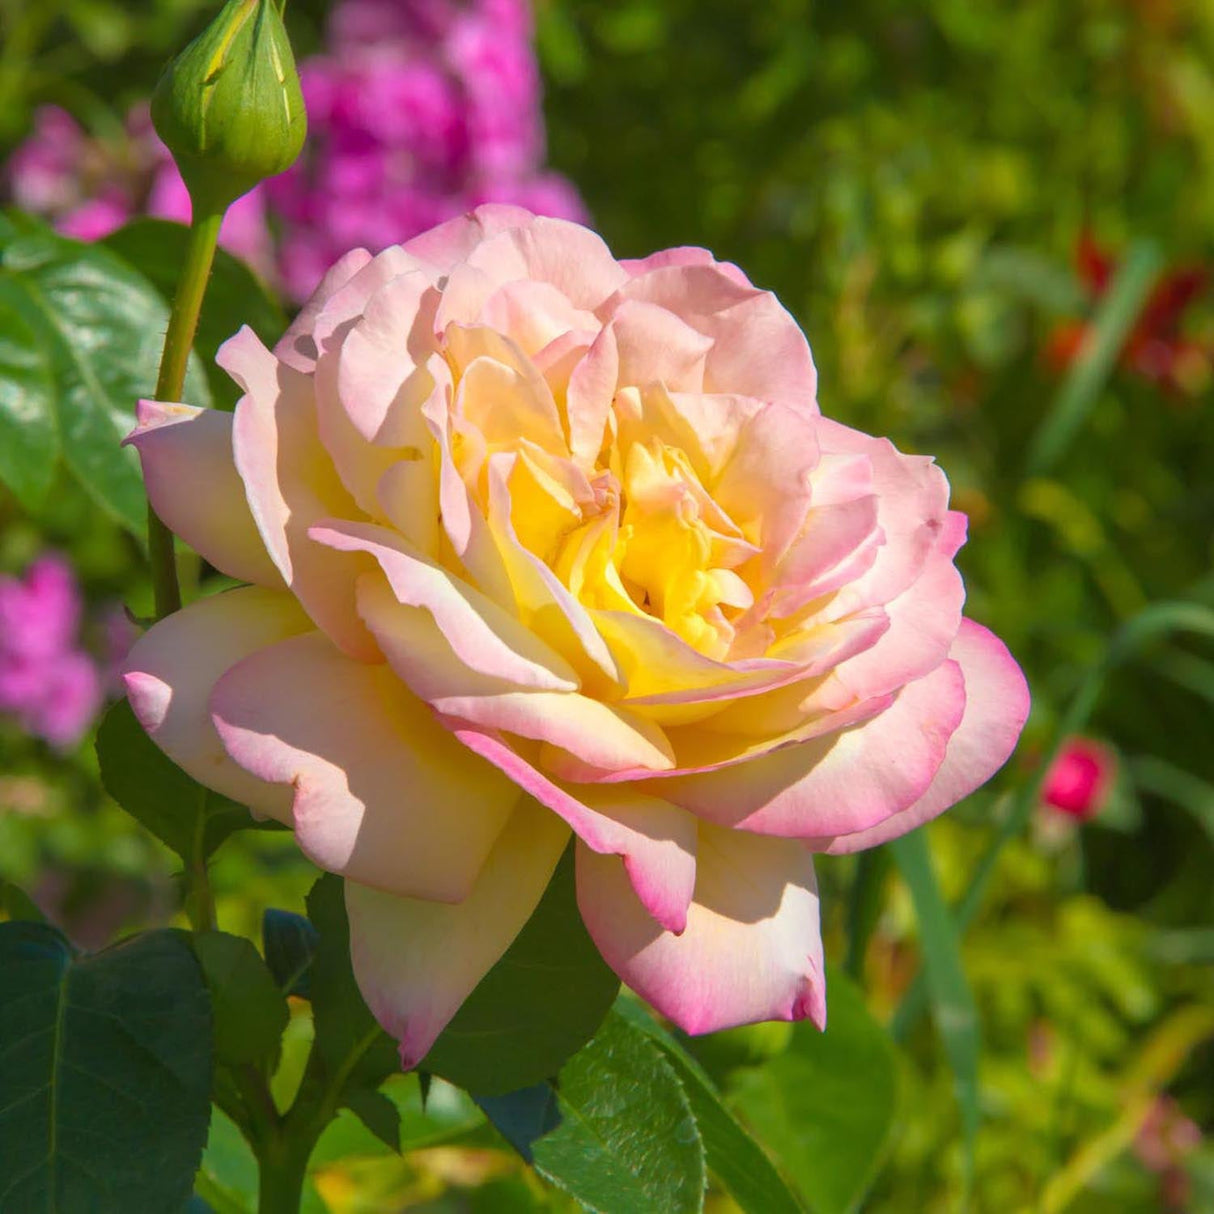 Trandafir Teahibrid Gloria Dei/Peace - VERDENA-livrat in ghiveci plant-o-fix de 2L